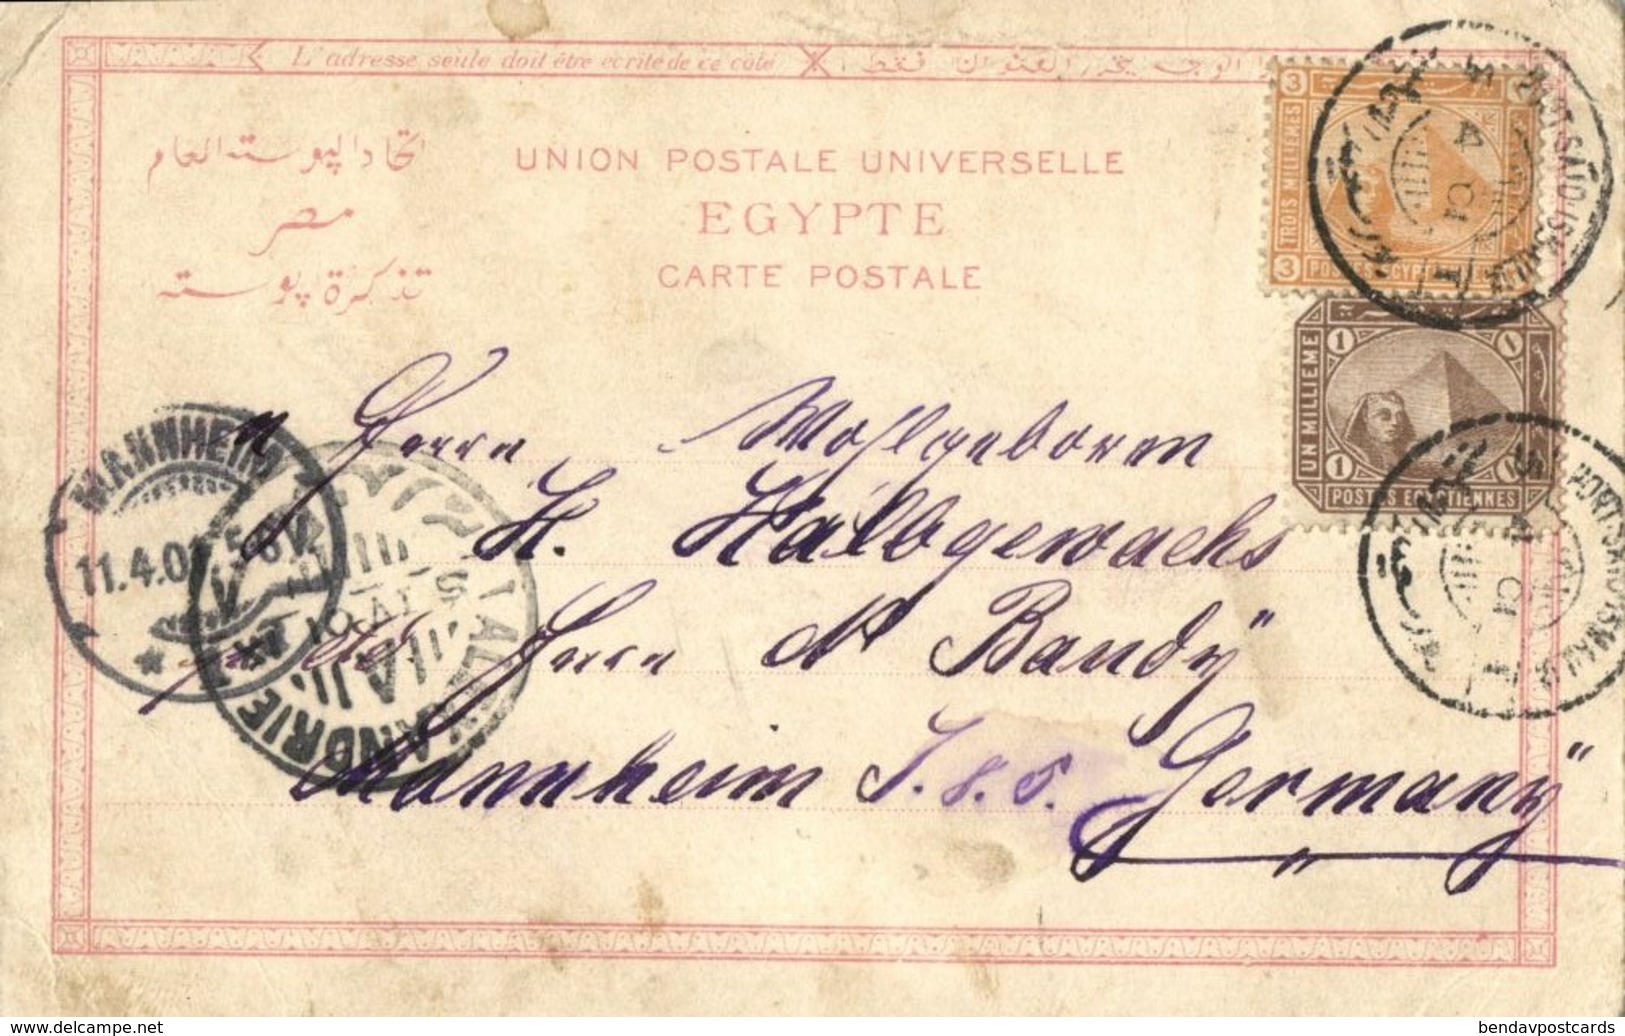 Egypt, CAIRE CAIRO, River Nile, Arab School Mosque Islam (1901) Litho Postcard - Cairo